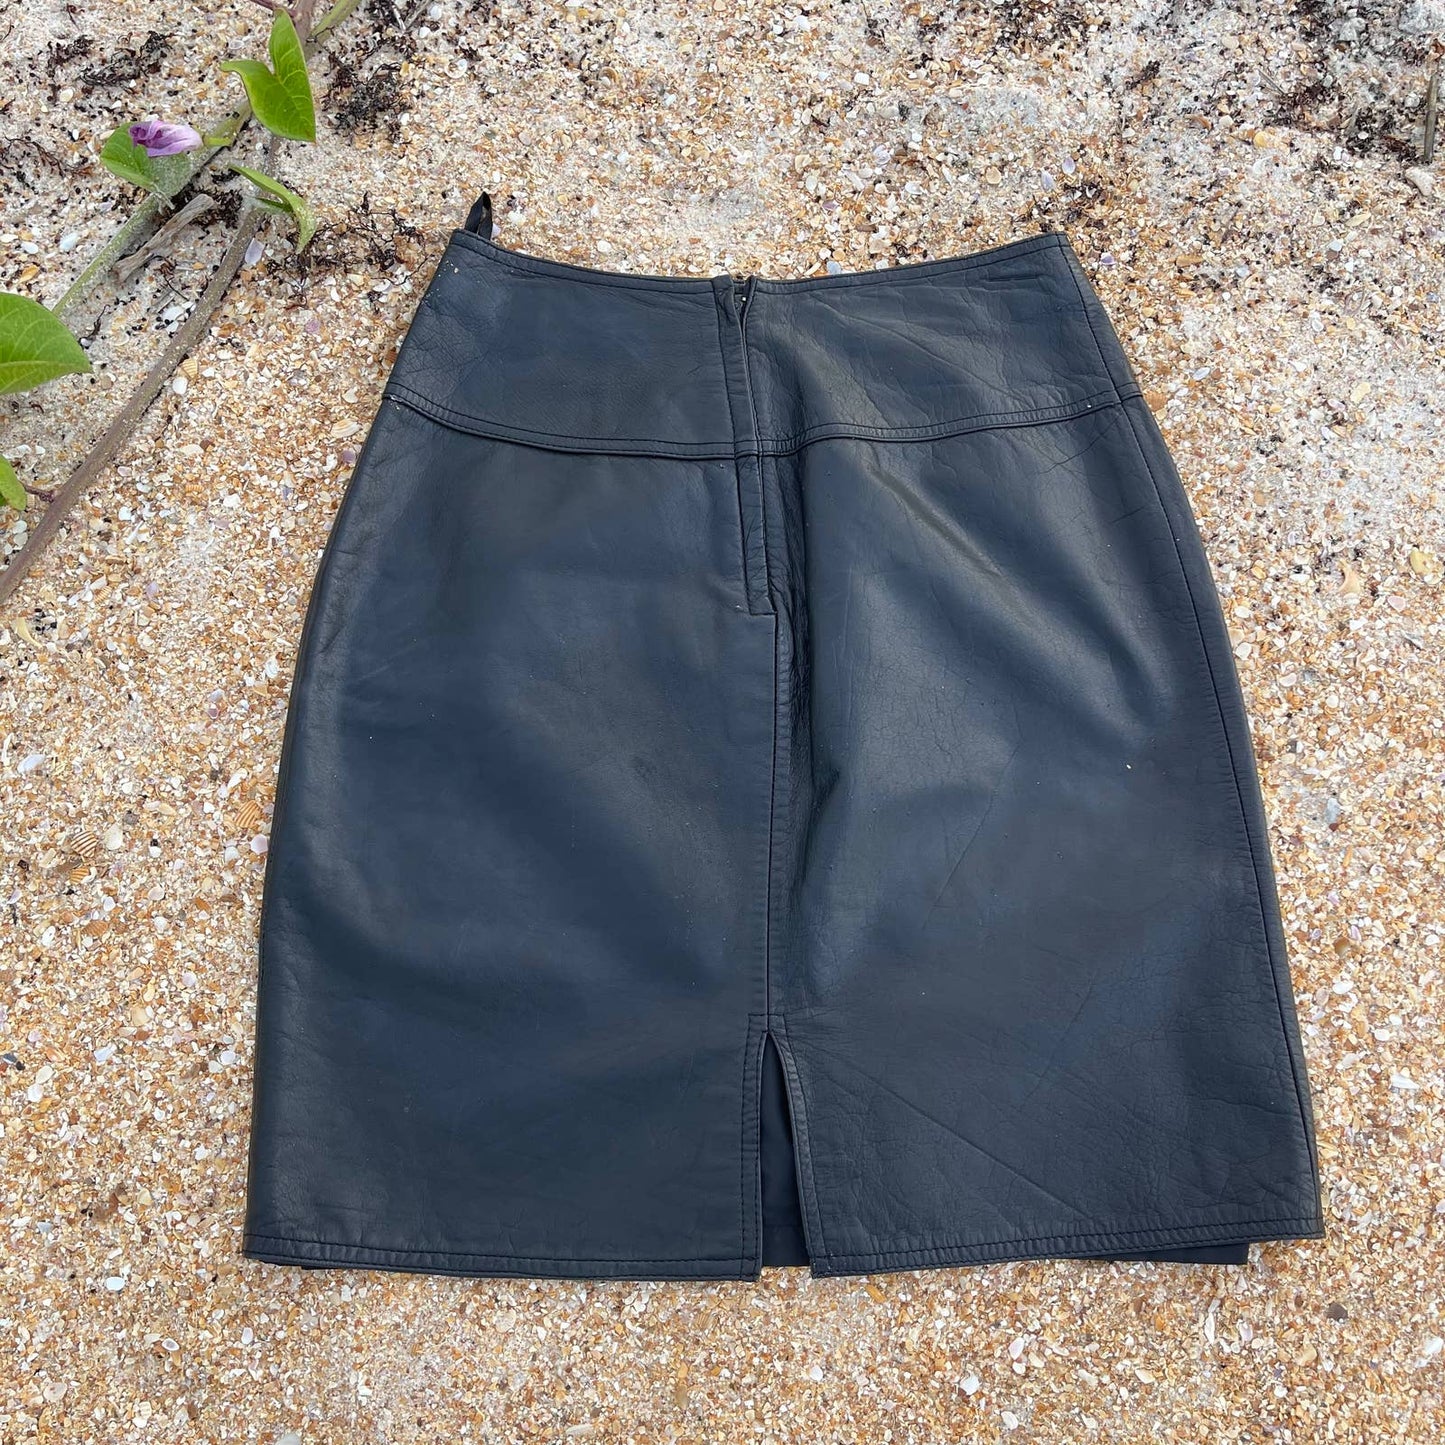 Vintage 80s Black Leather Mini Skirt with Slit Biker Babe Catrina Size 9